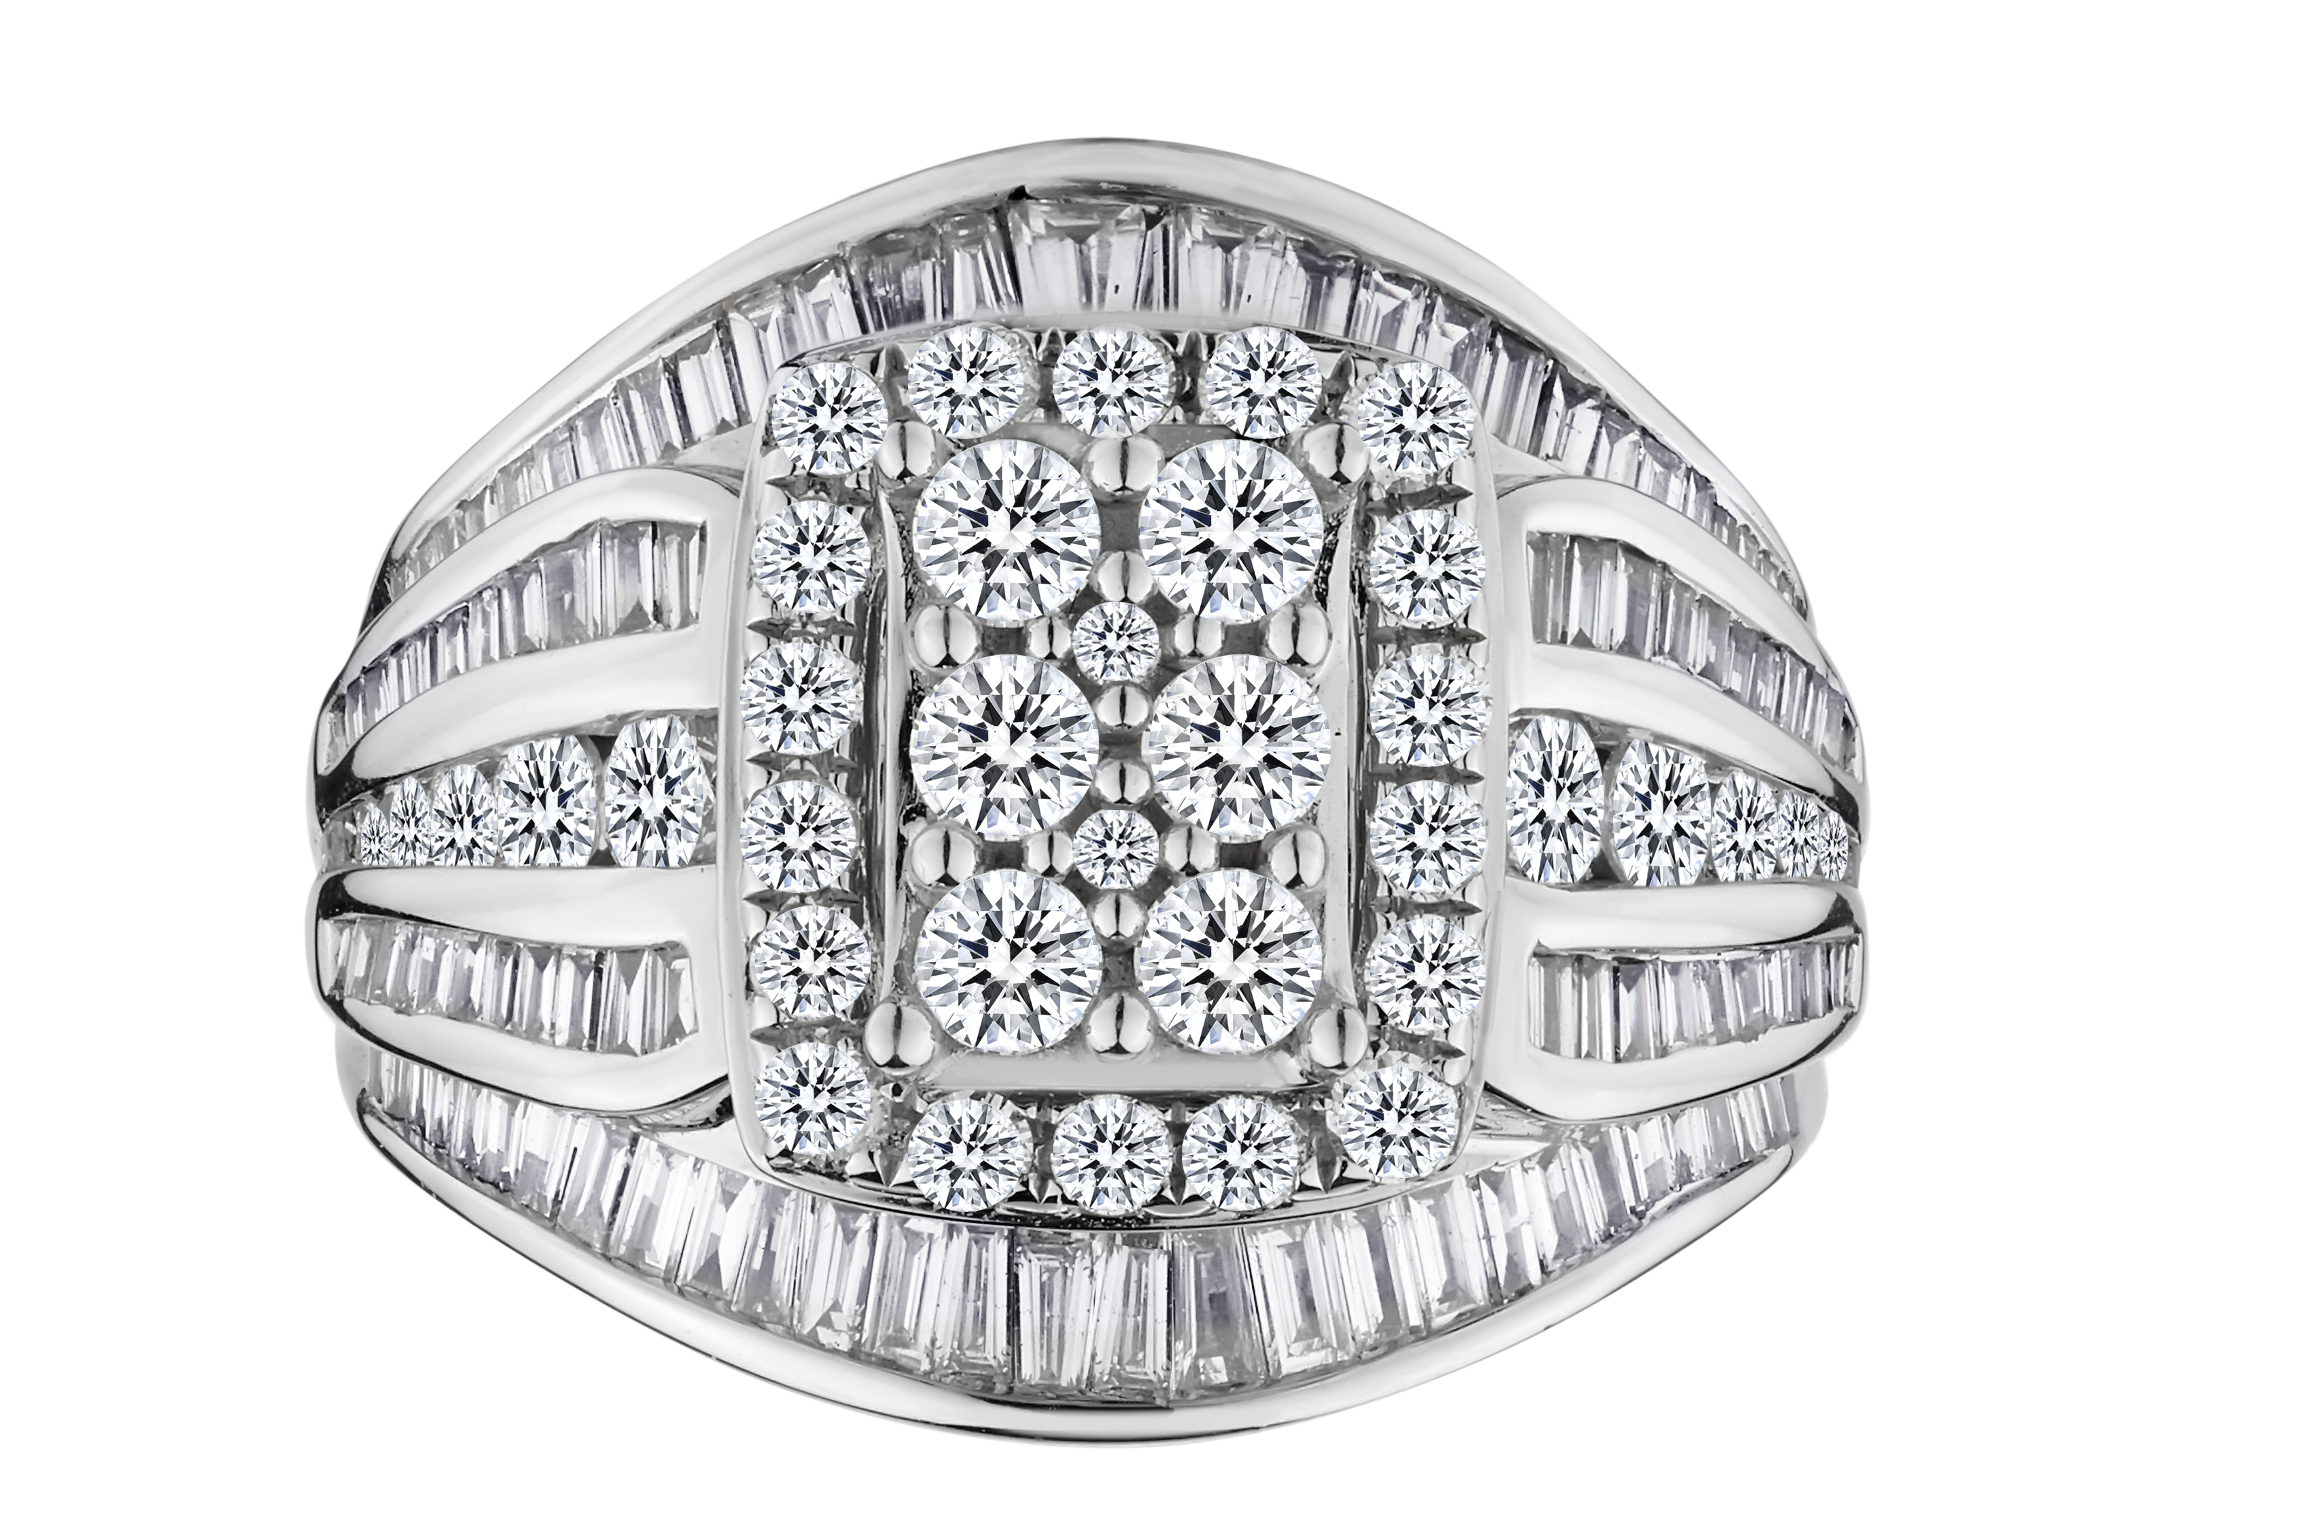 1.72 Carat of Diamonds "Dream" Ring, 14kt White Gold.....................NOW